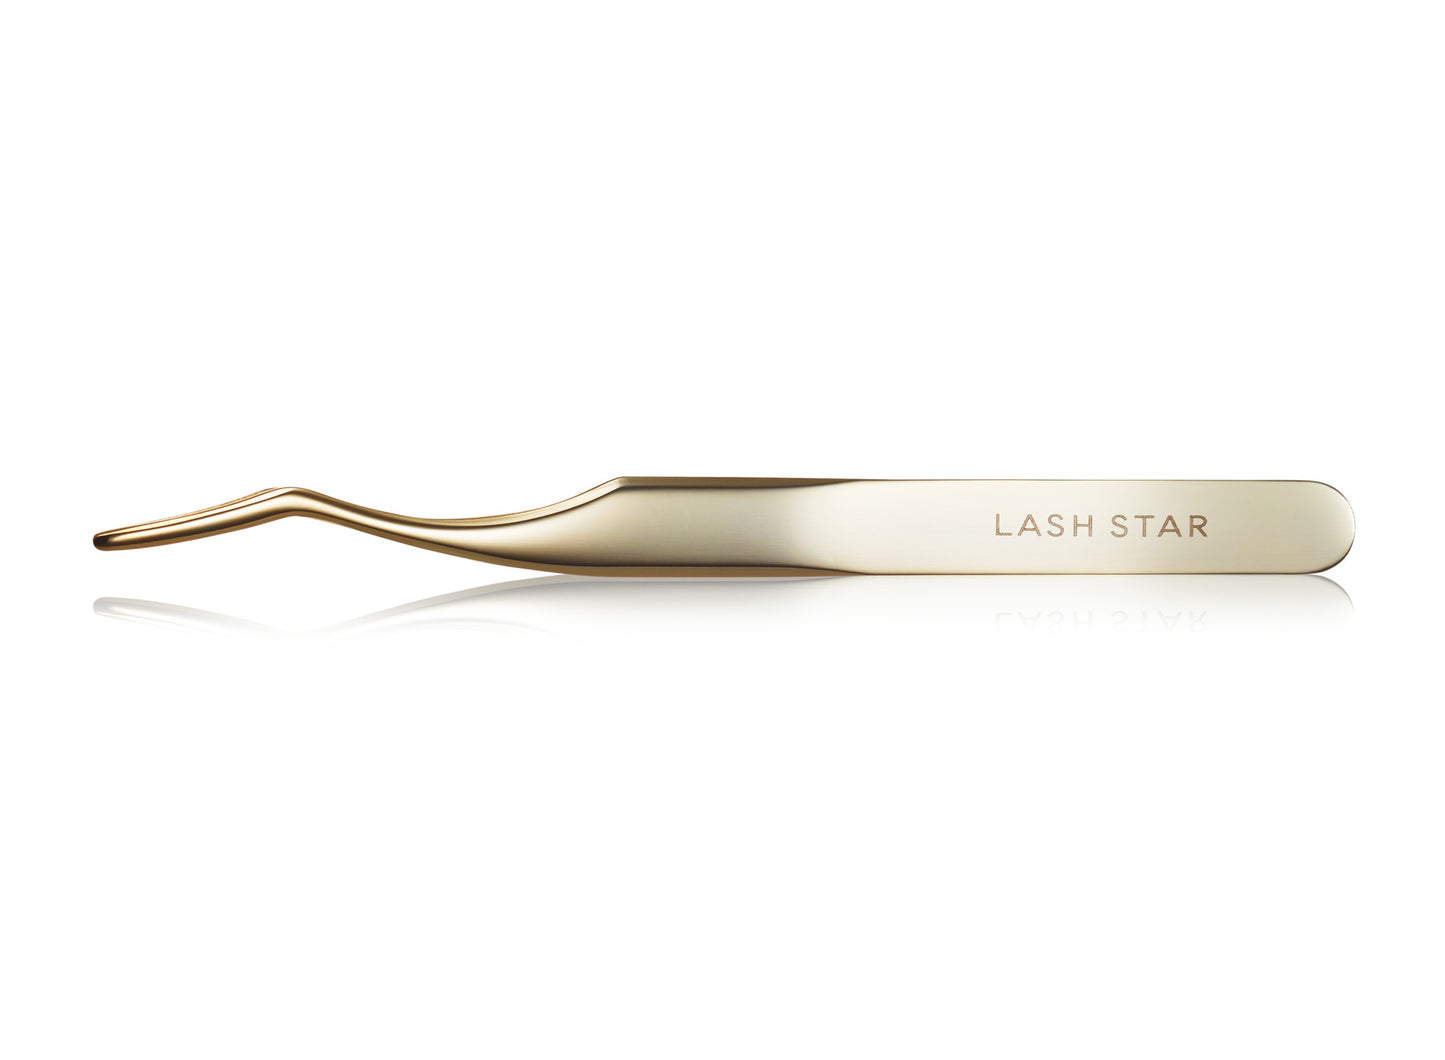 Lash Star Beauty lash applicator tool